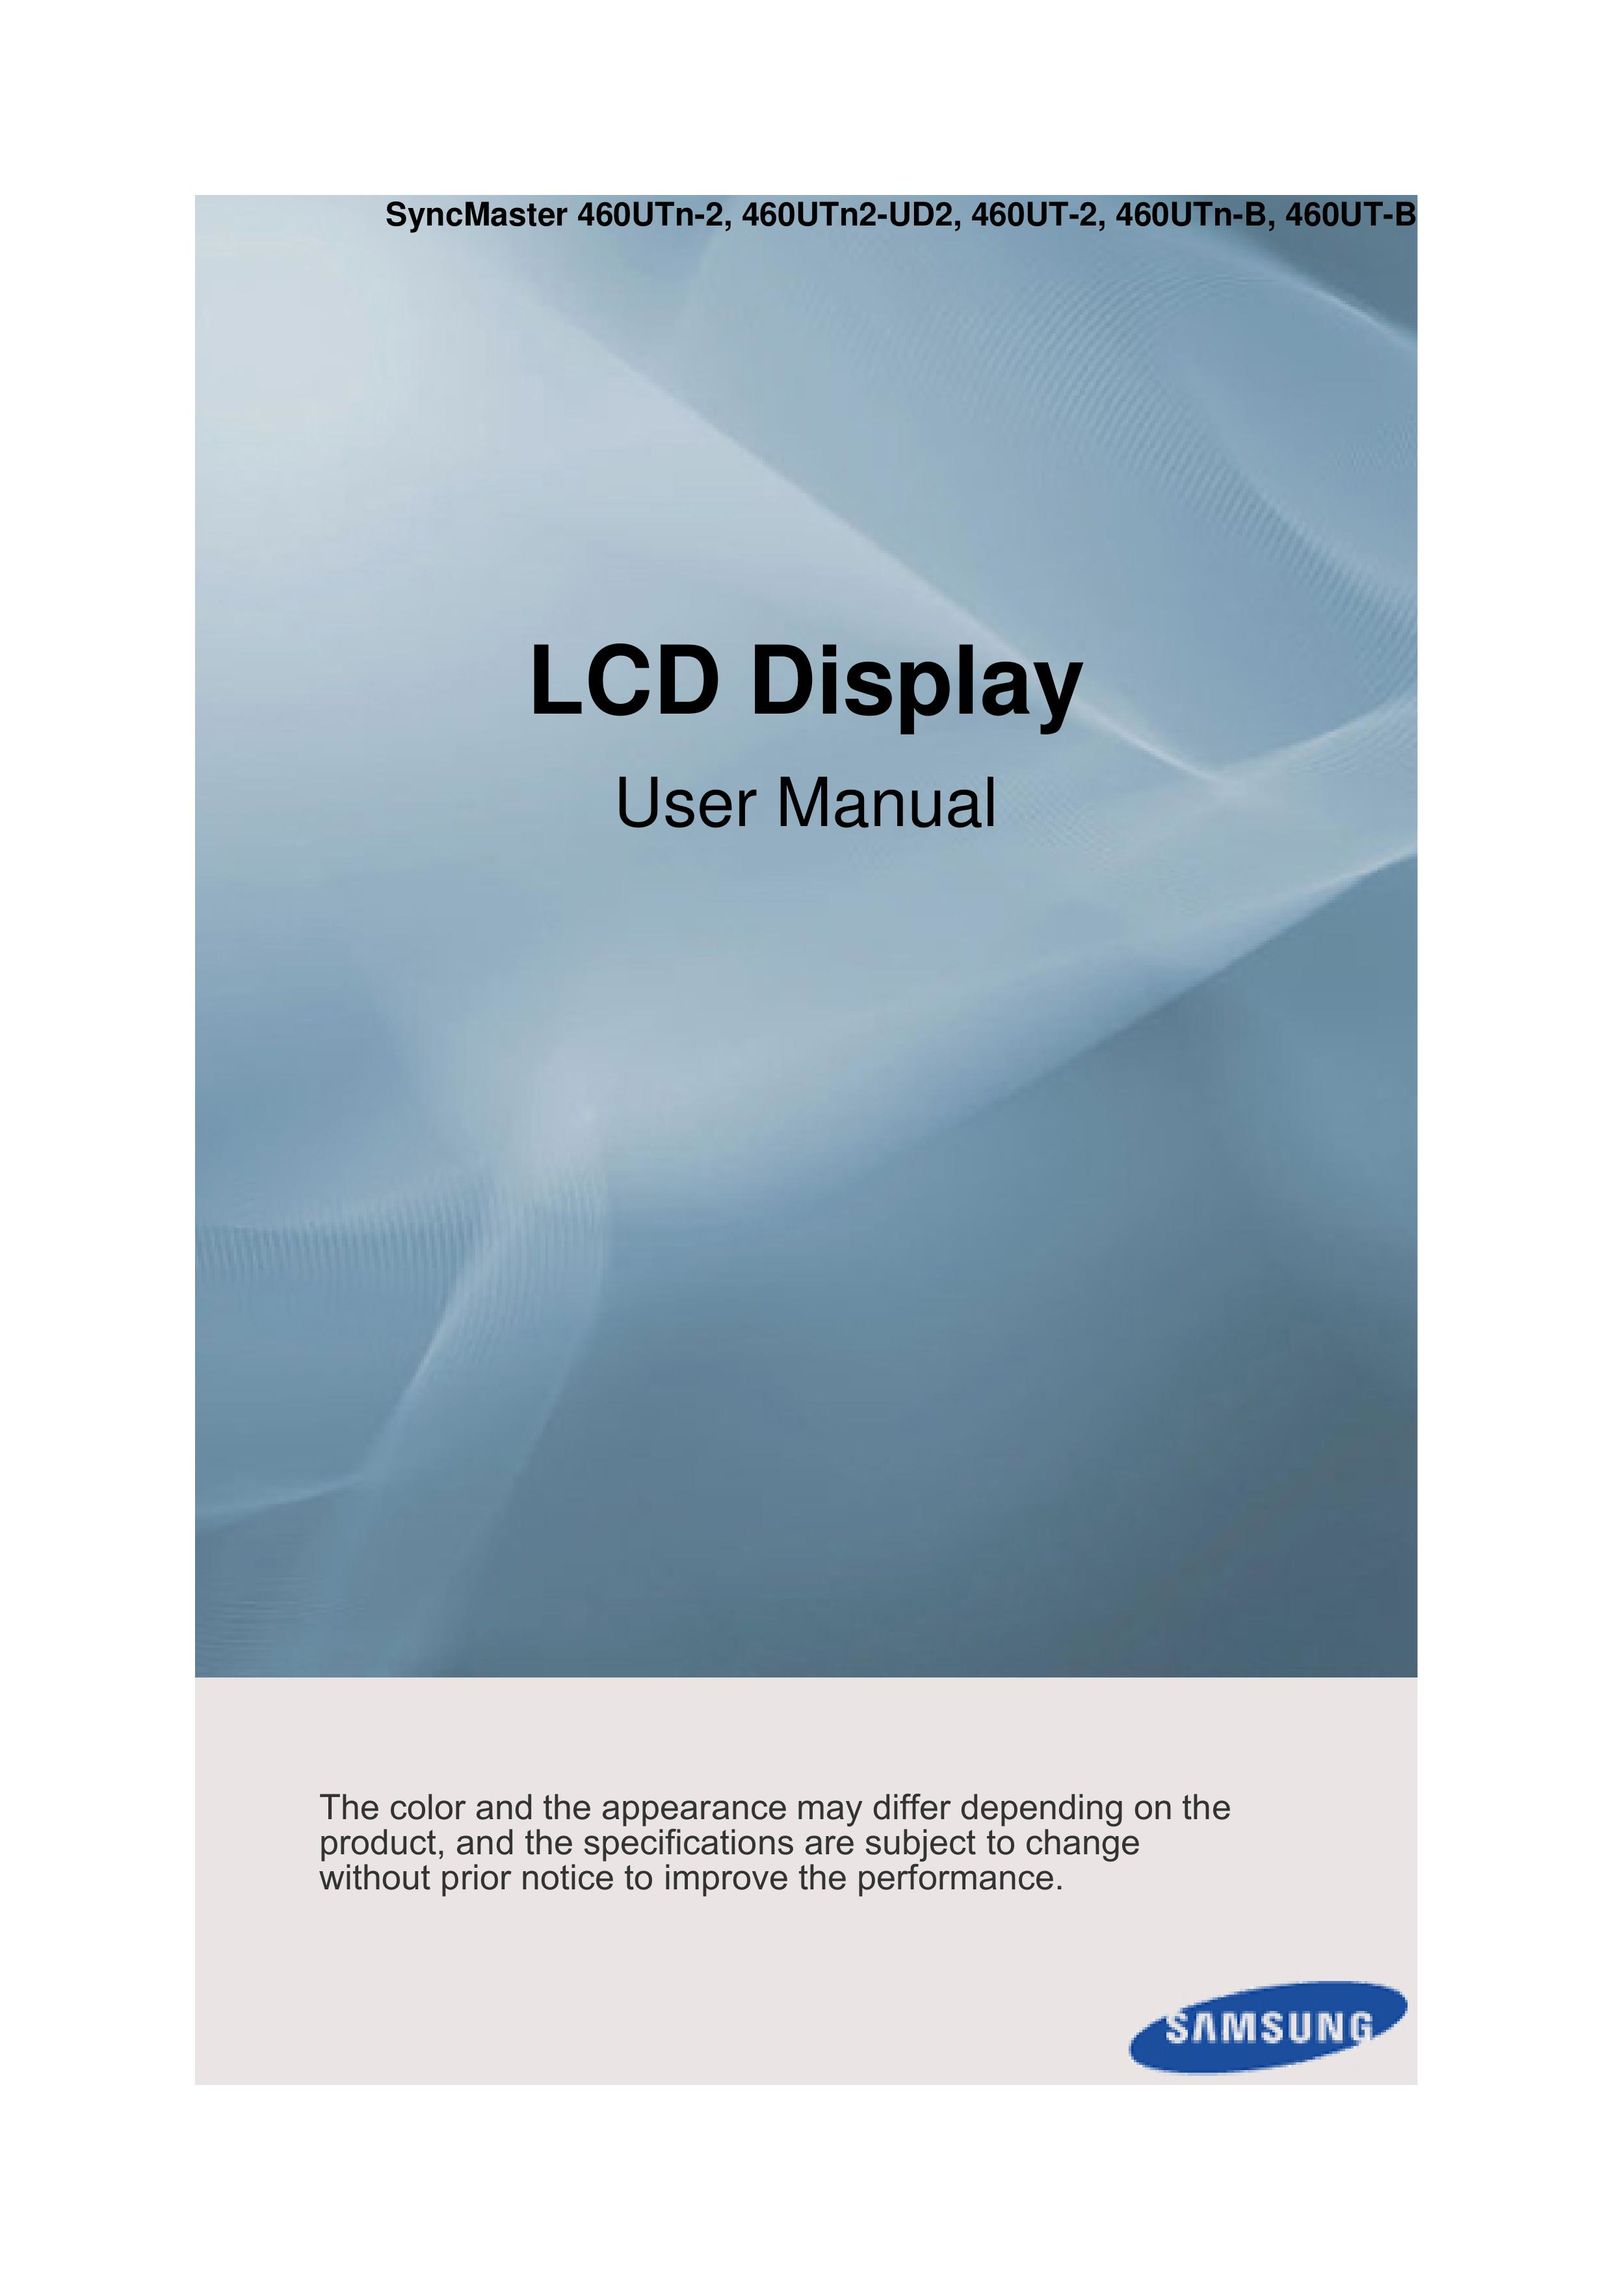 Samsung 460UTn2-UD2 Car Video System User Manual